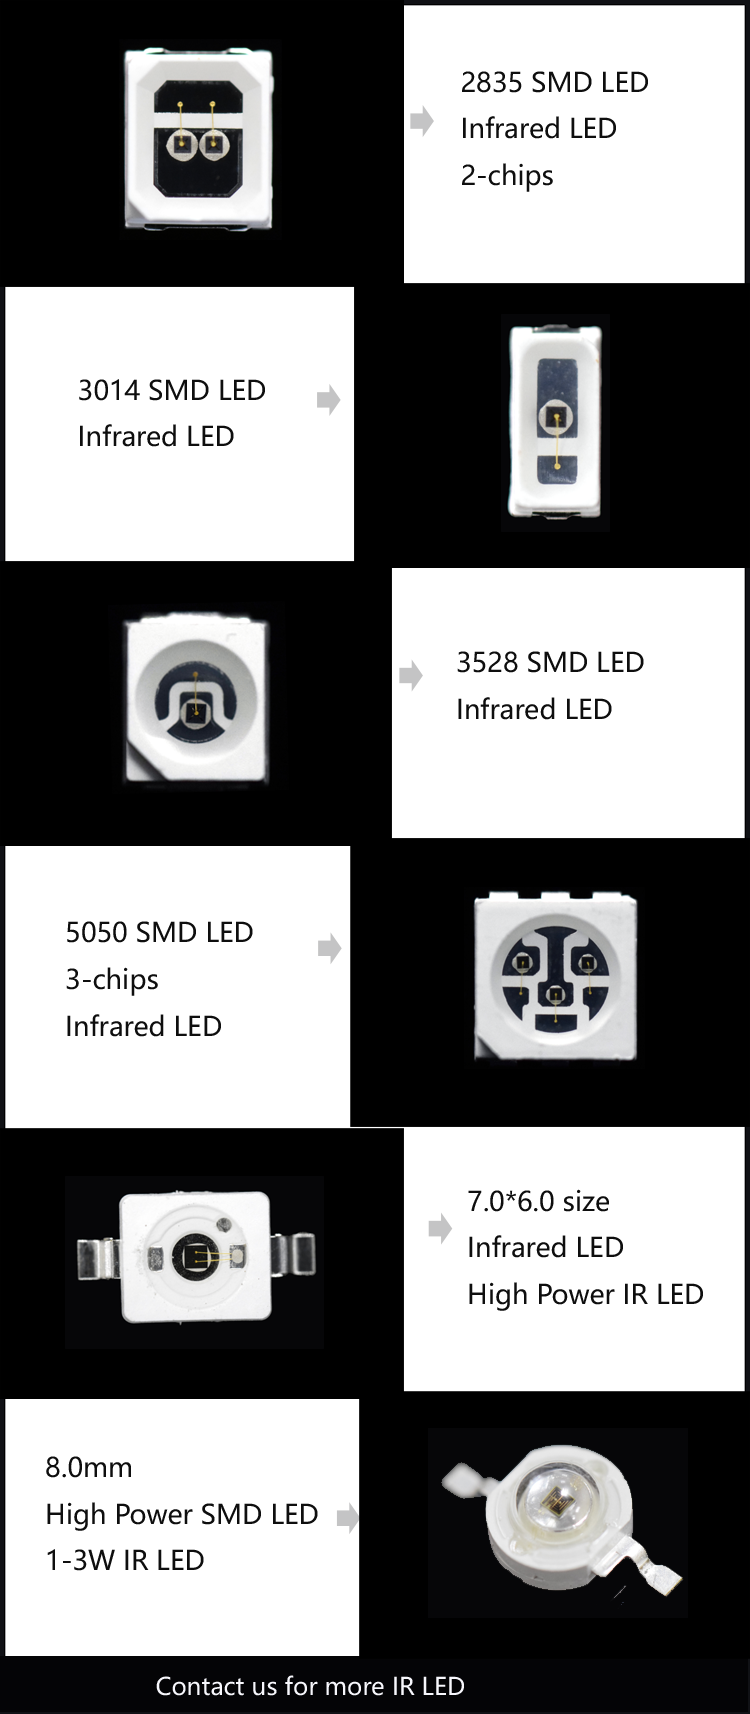 Infrared LED - SMD LED